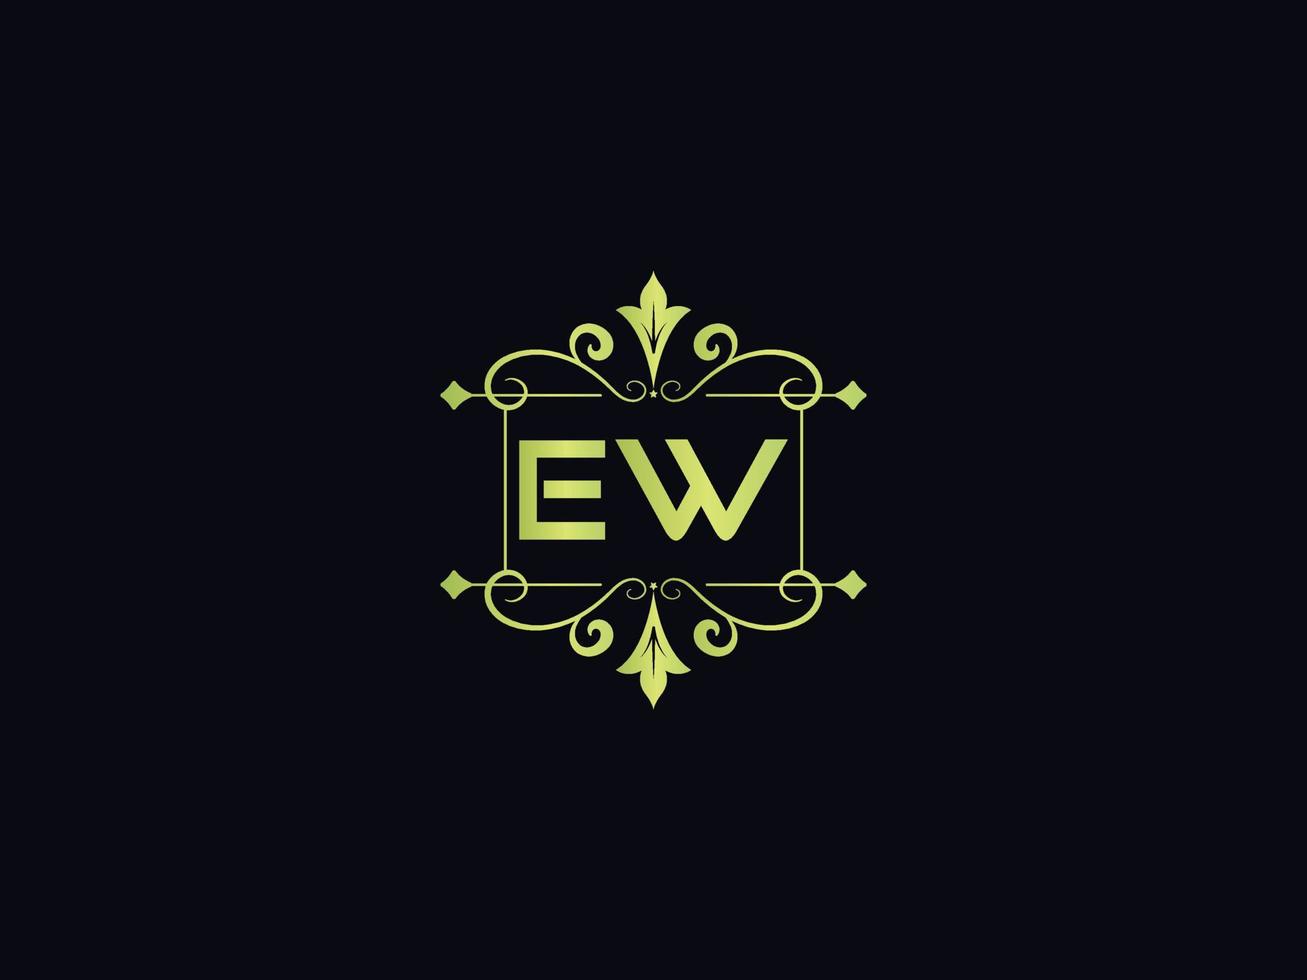 Minimal Ew Logo Image, Square Ew Luxury Logo Letter Vector Icon Design